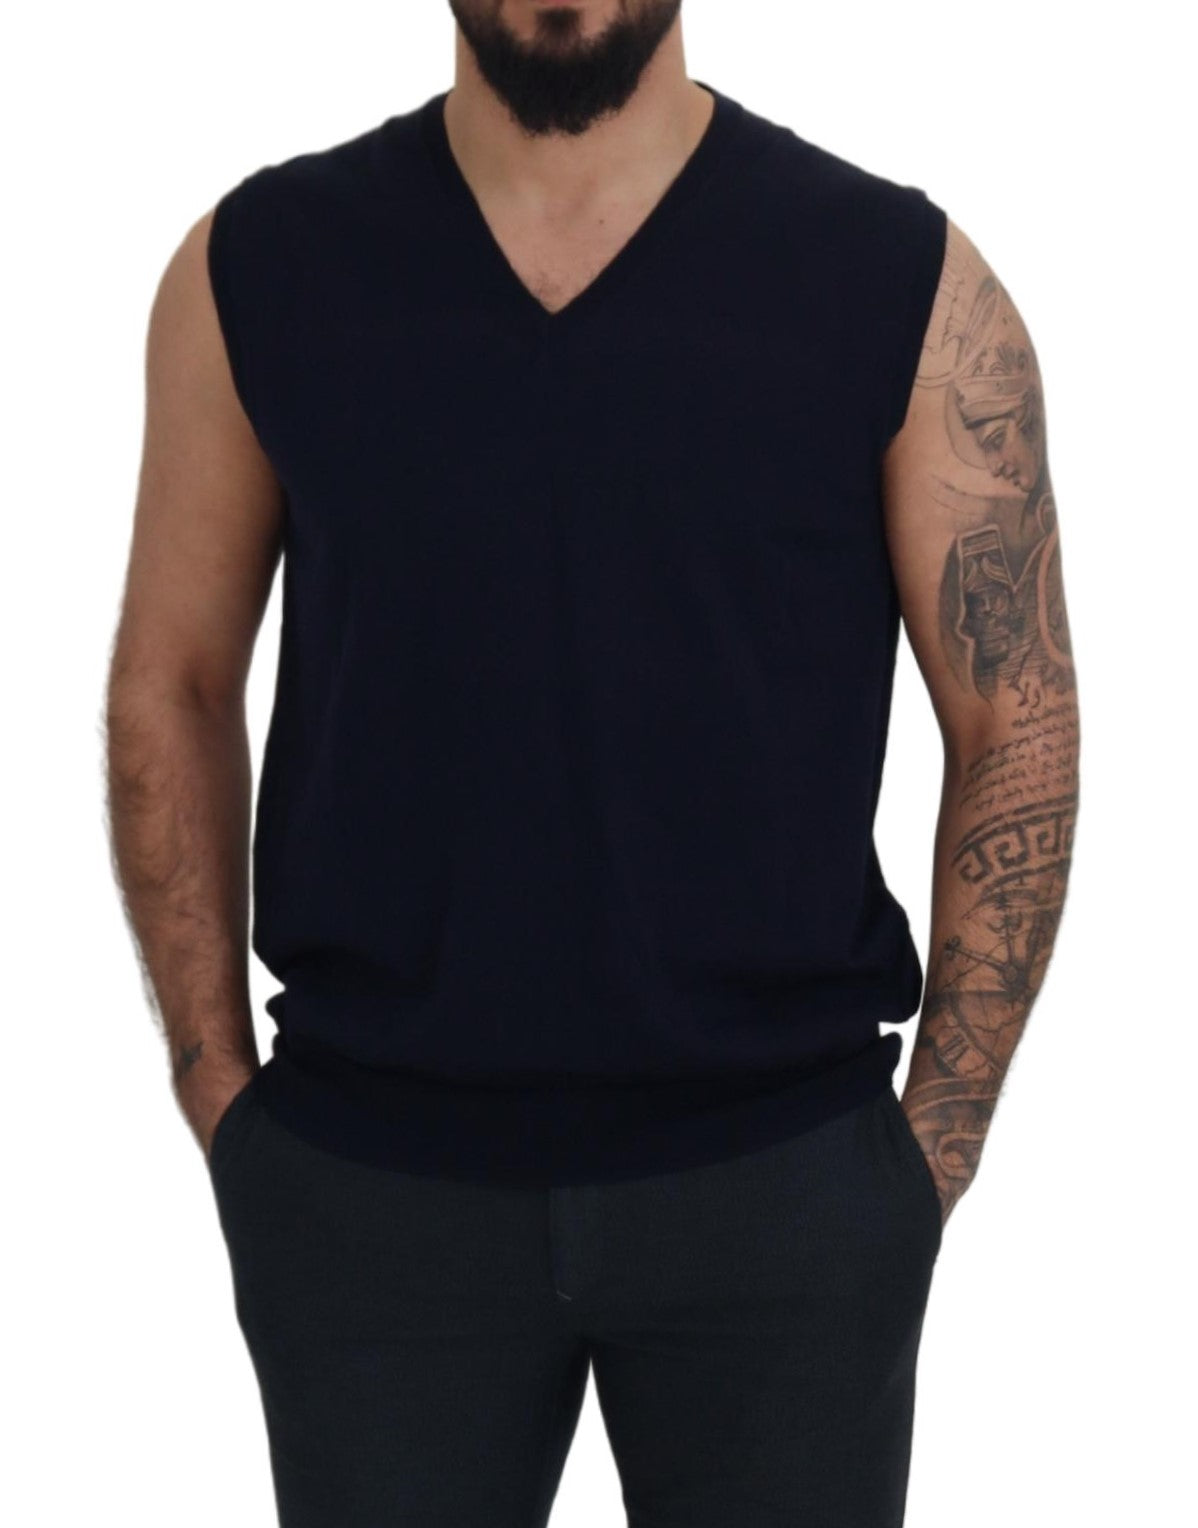 Paolo Pecora Milano Black Cotton V-Ausschnitt ärmelloses Tank T-Shirt